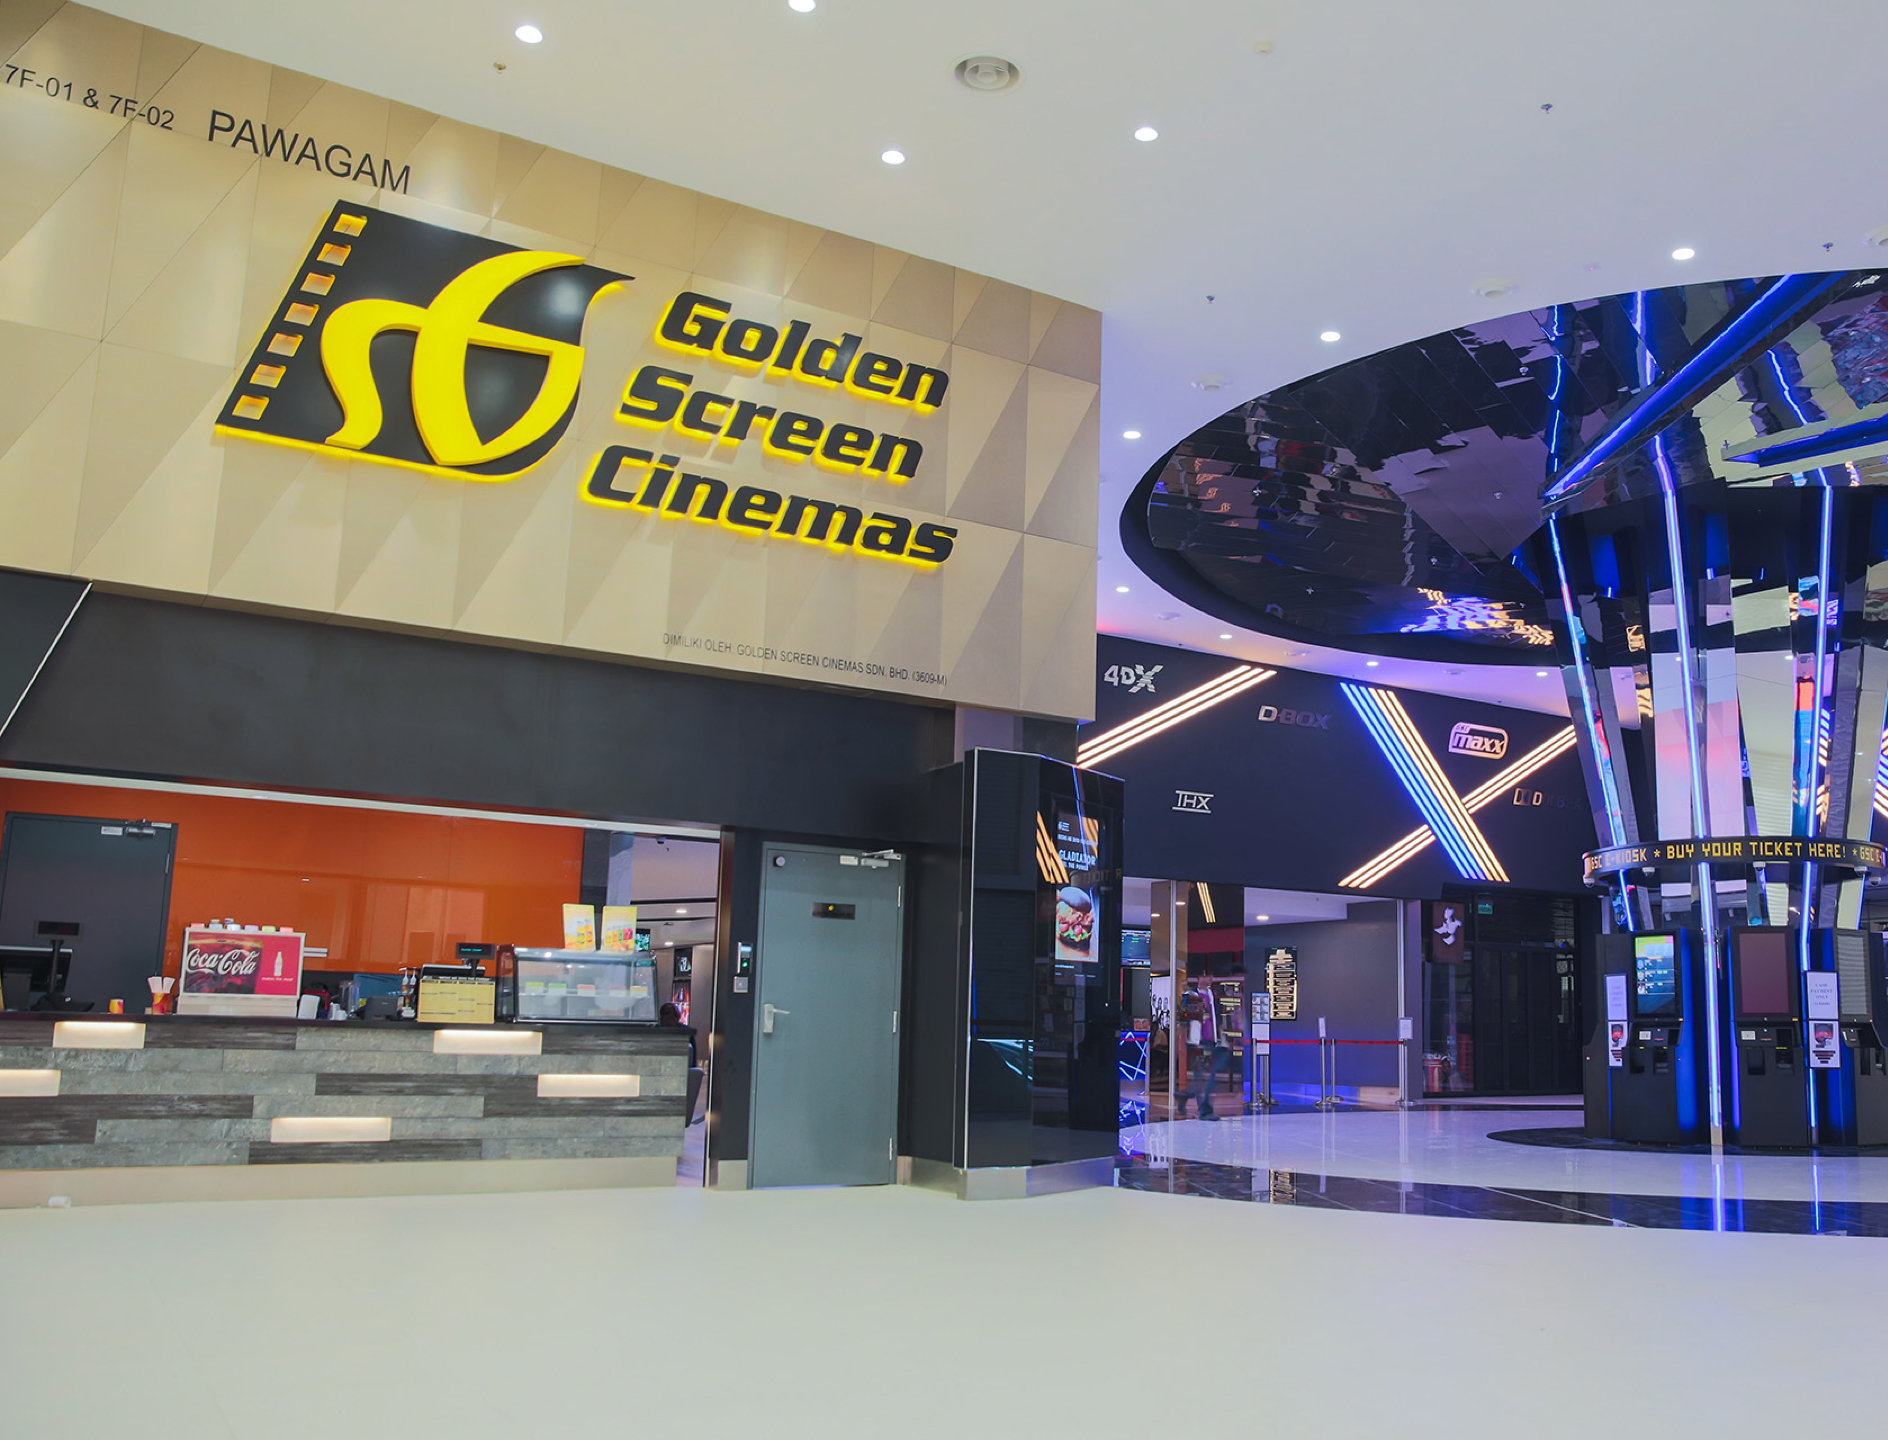 Golden Screen Cinemas | The Kuok Group